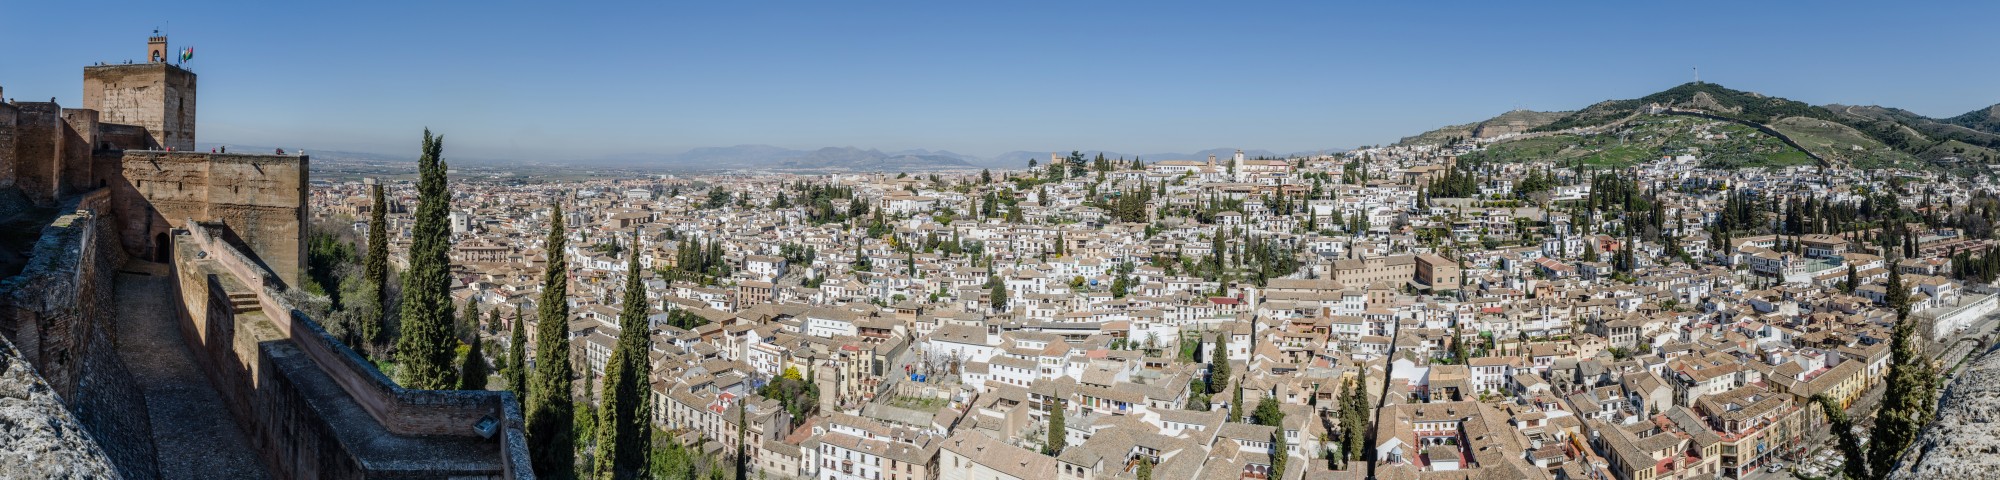 Granada from Alhambra 2014